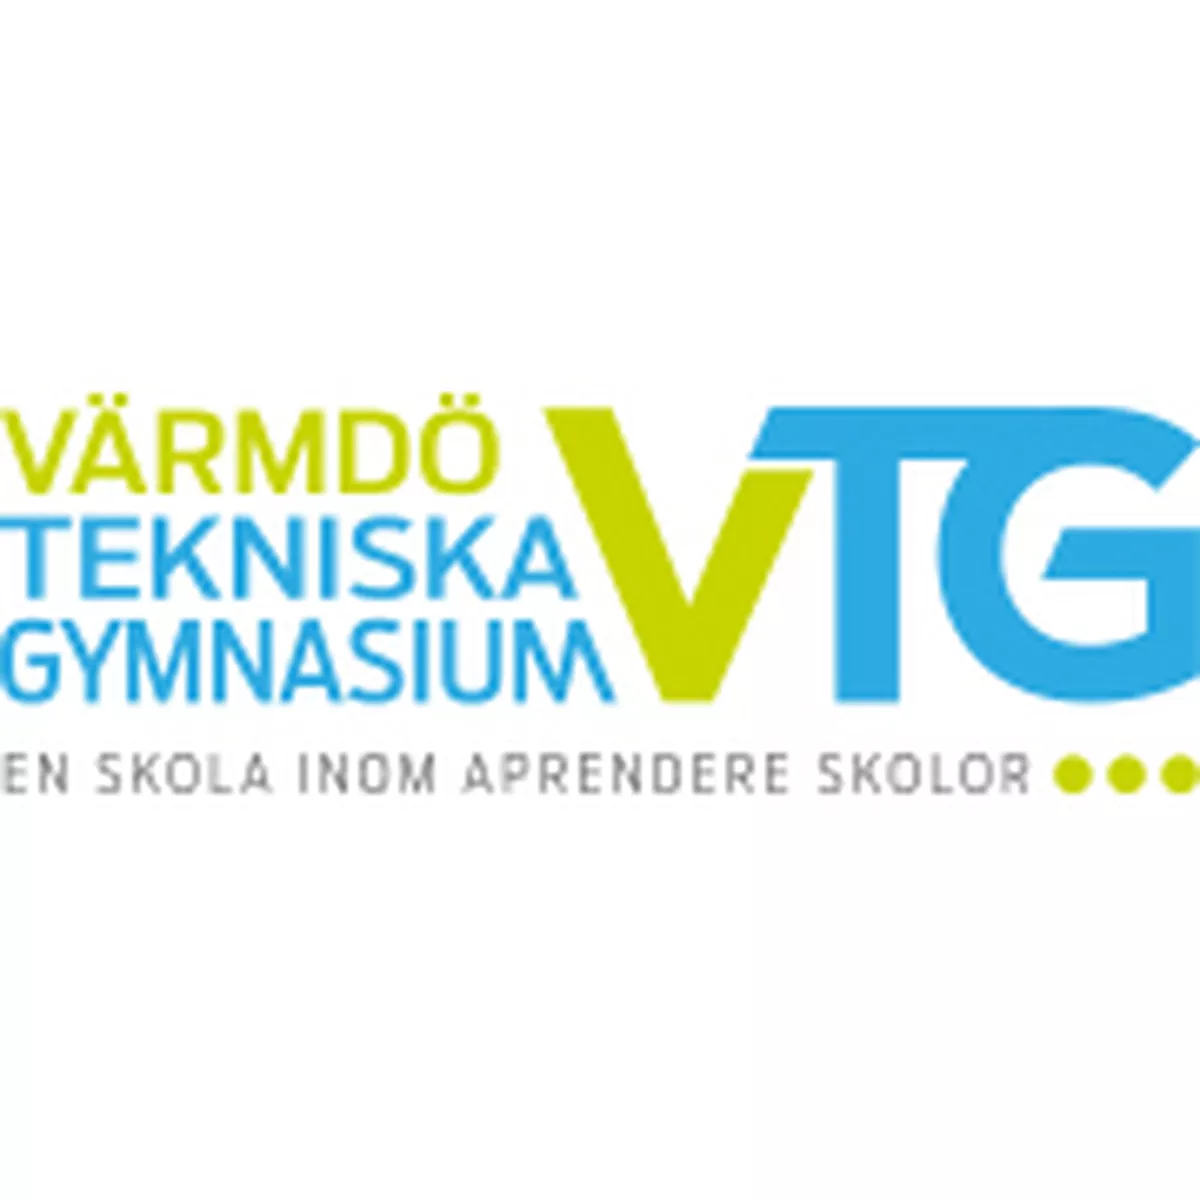 Värmdö Tekniska Gymnasium, VTG